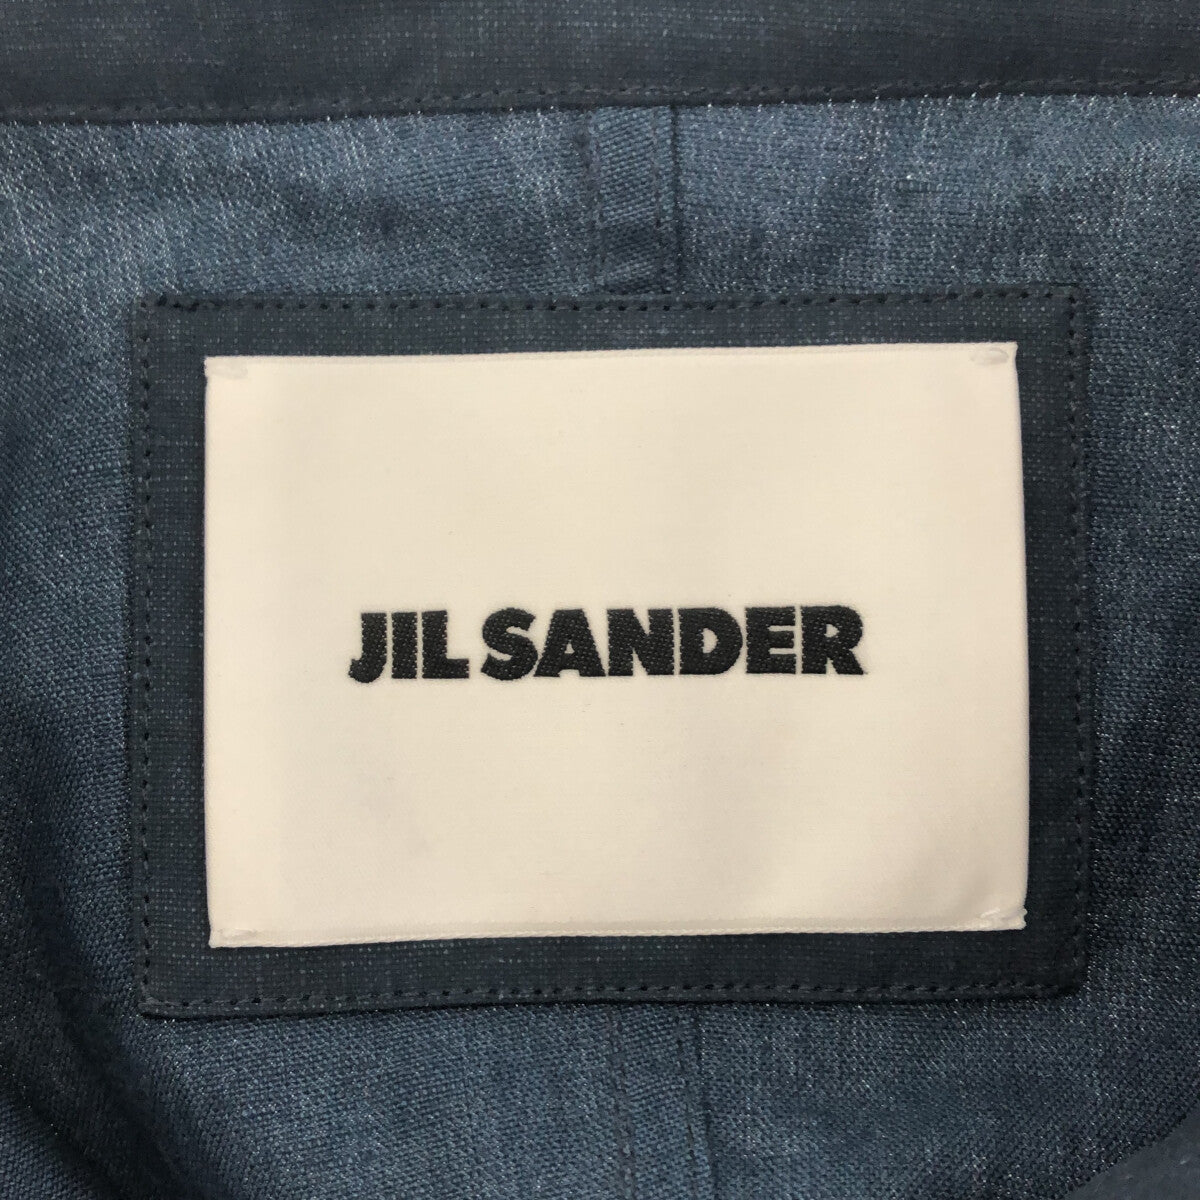 JIL SANDER / ジルサンダー | リネン バンドカラーシャツ | 36 | ネイビー | レディース